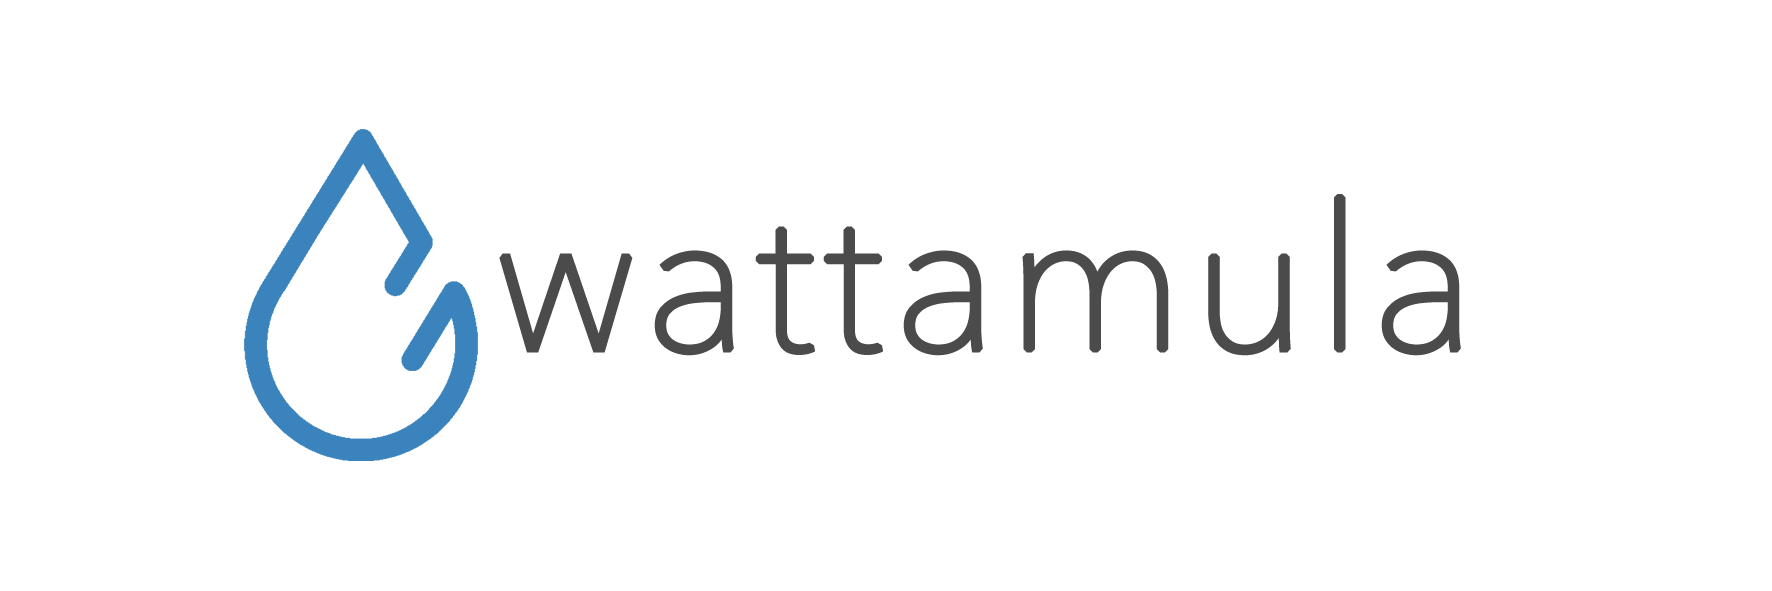 https://www.waterforlife.nl/files/visuals/Wattamula-logo-transparant-wit-ruimte-003_2022-06-27-112712_ubks.png